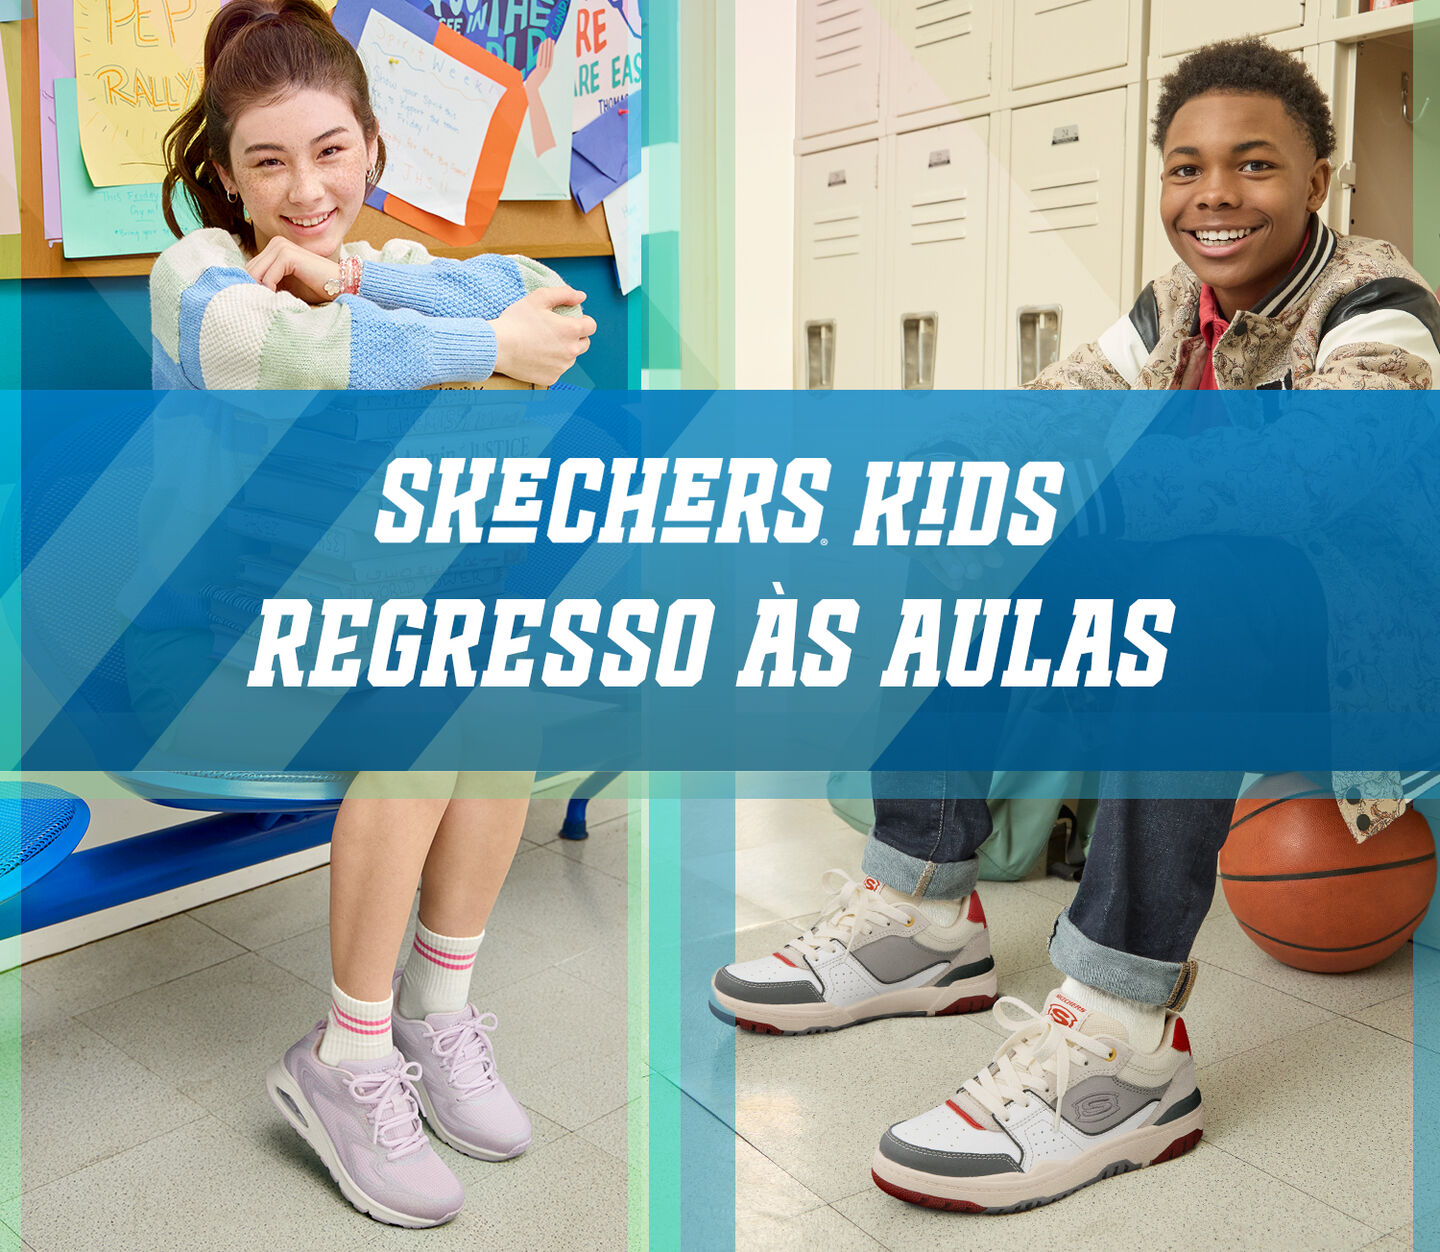 Skechers Kids Regresso às aulas